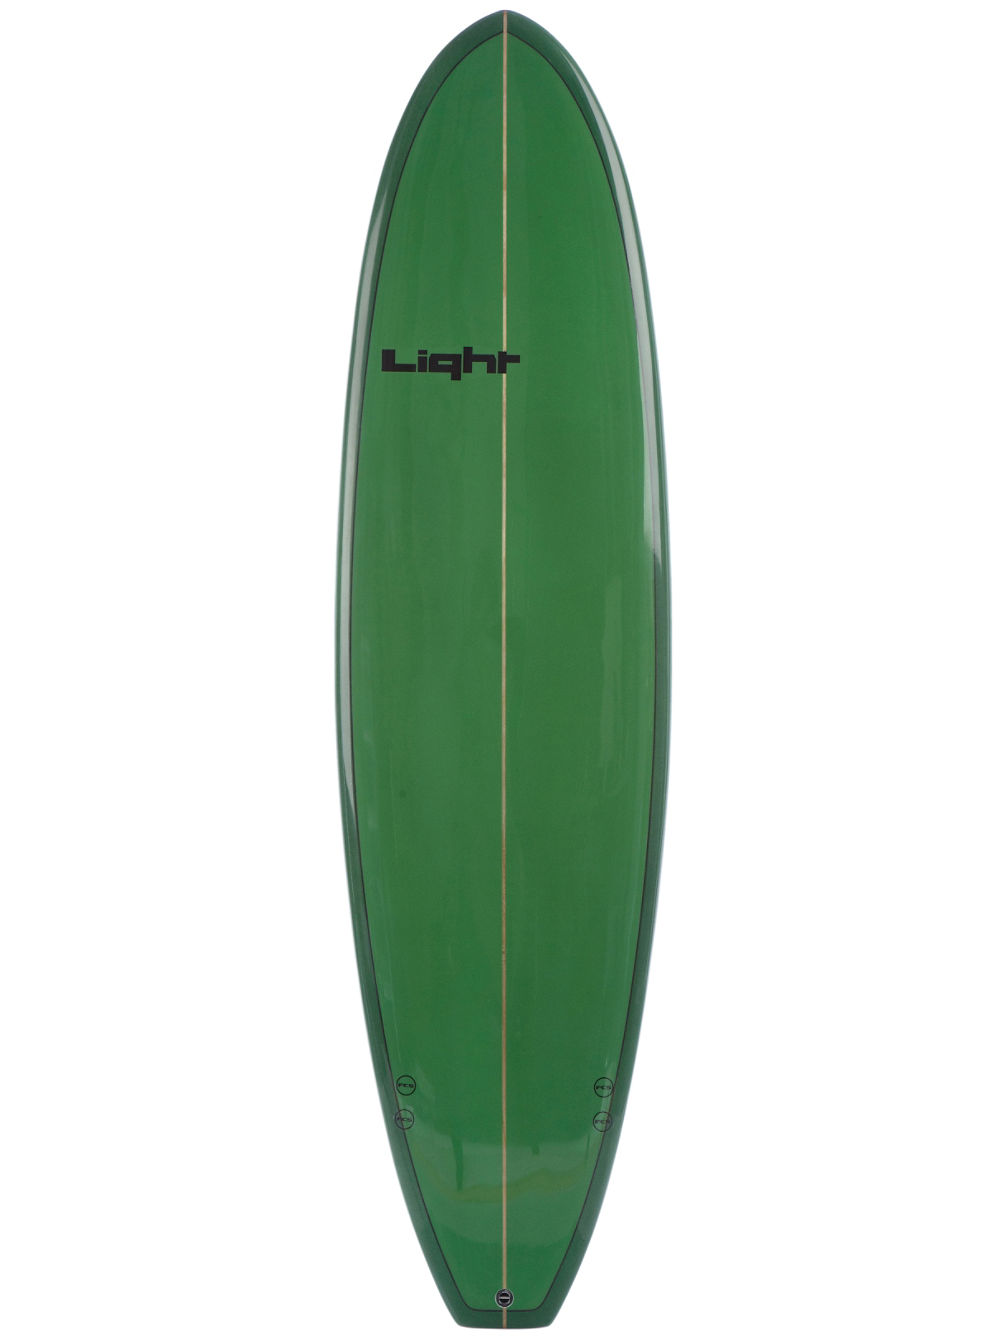 WTF Green 7&amp;#039;6 Surfboard